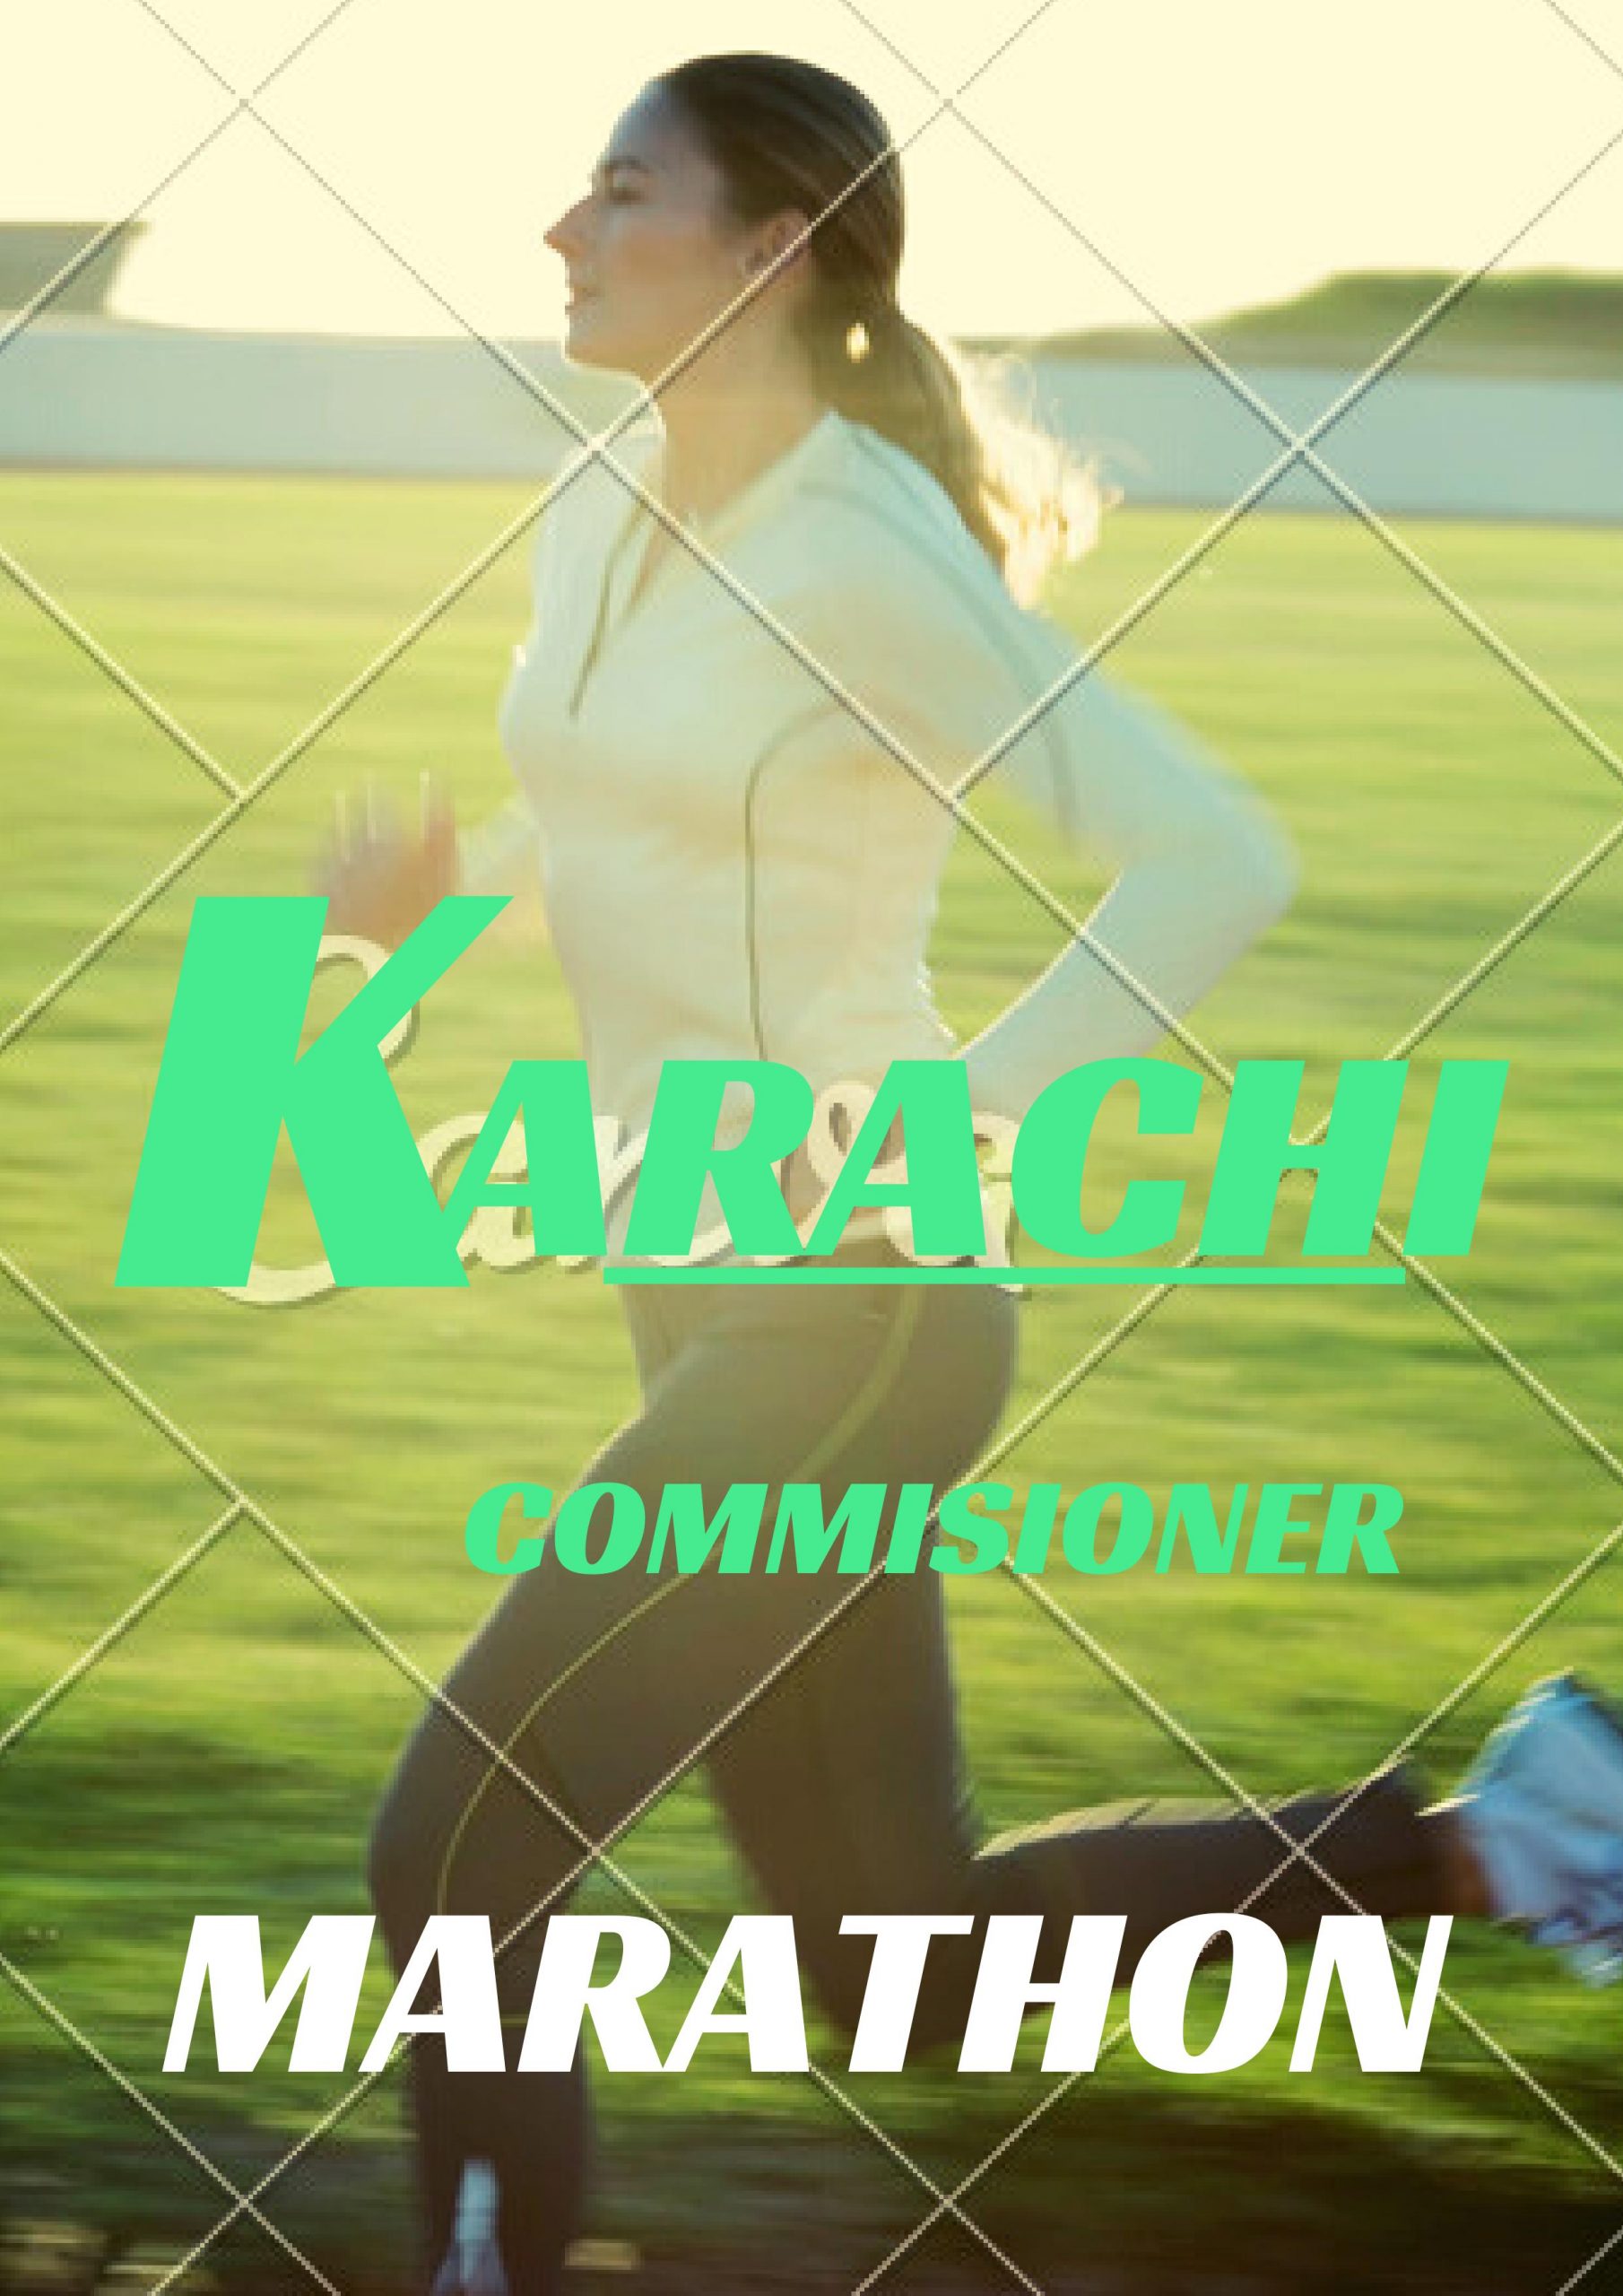 Karachi Commissioner Marathon